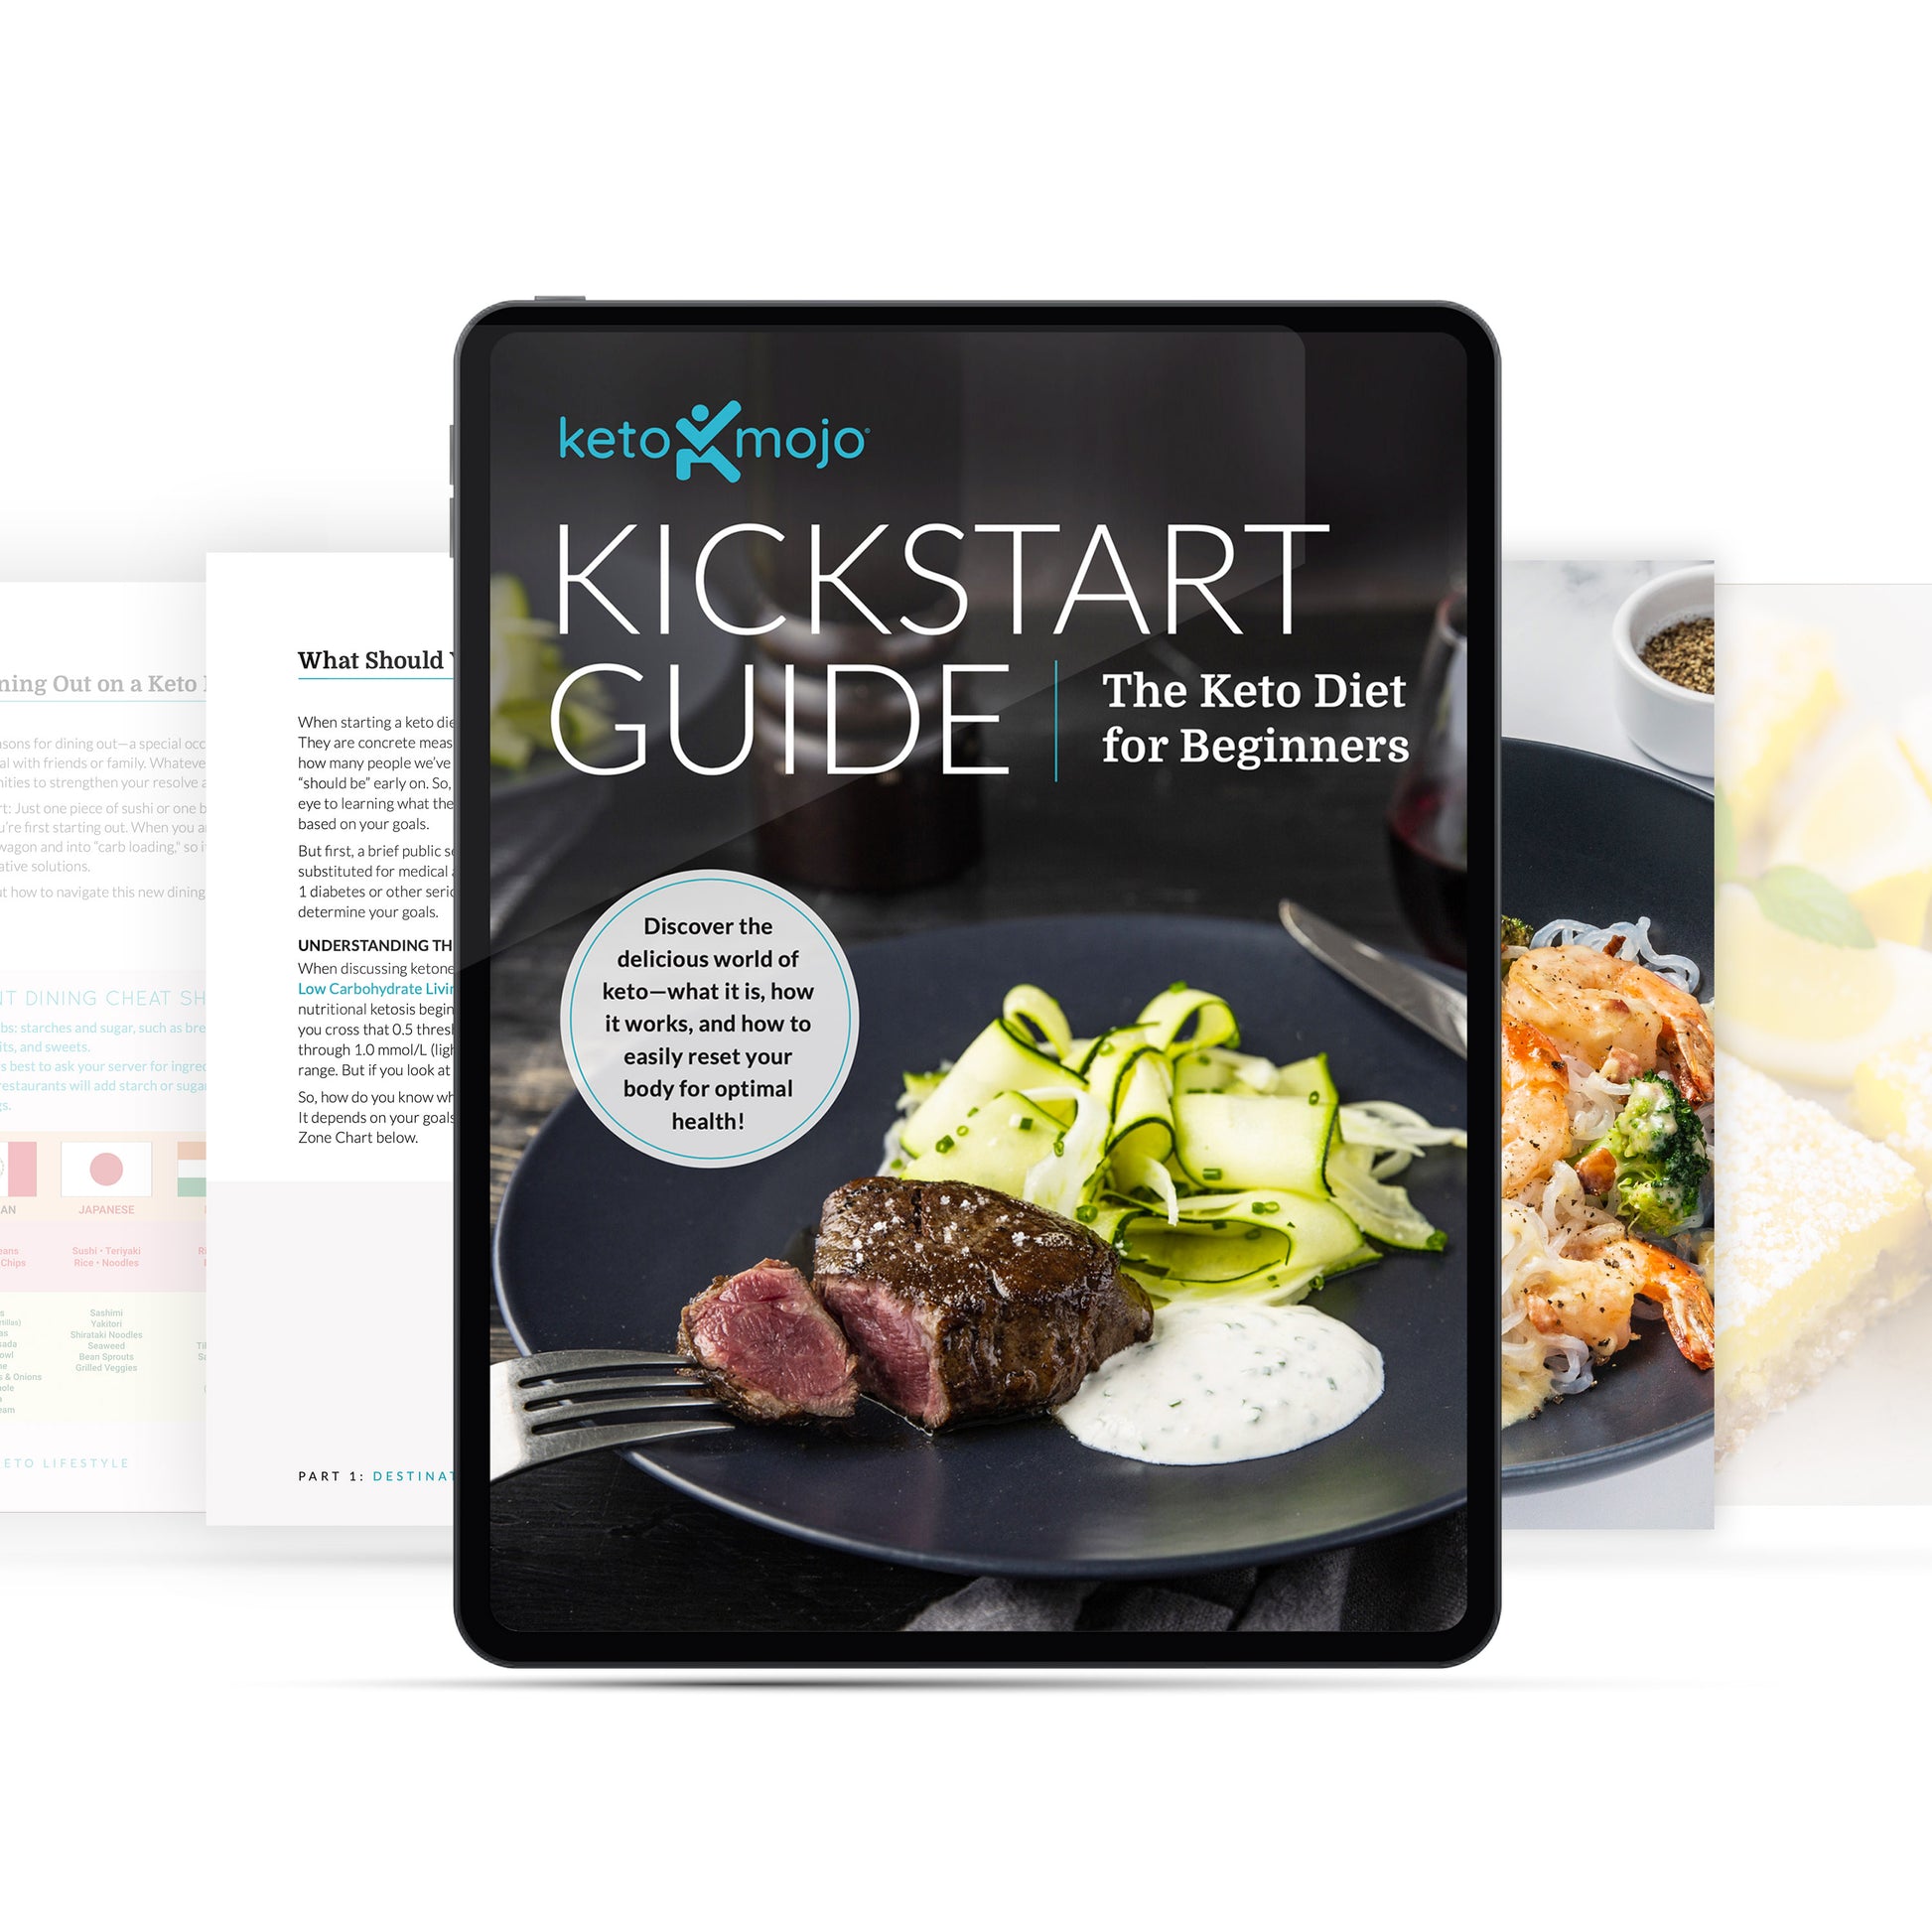 Kickstart Guide : Keto for Beginners (livre électronique numérique) - Keto-Mojo  USA